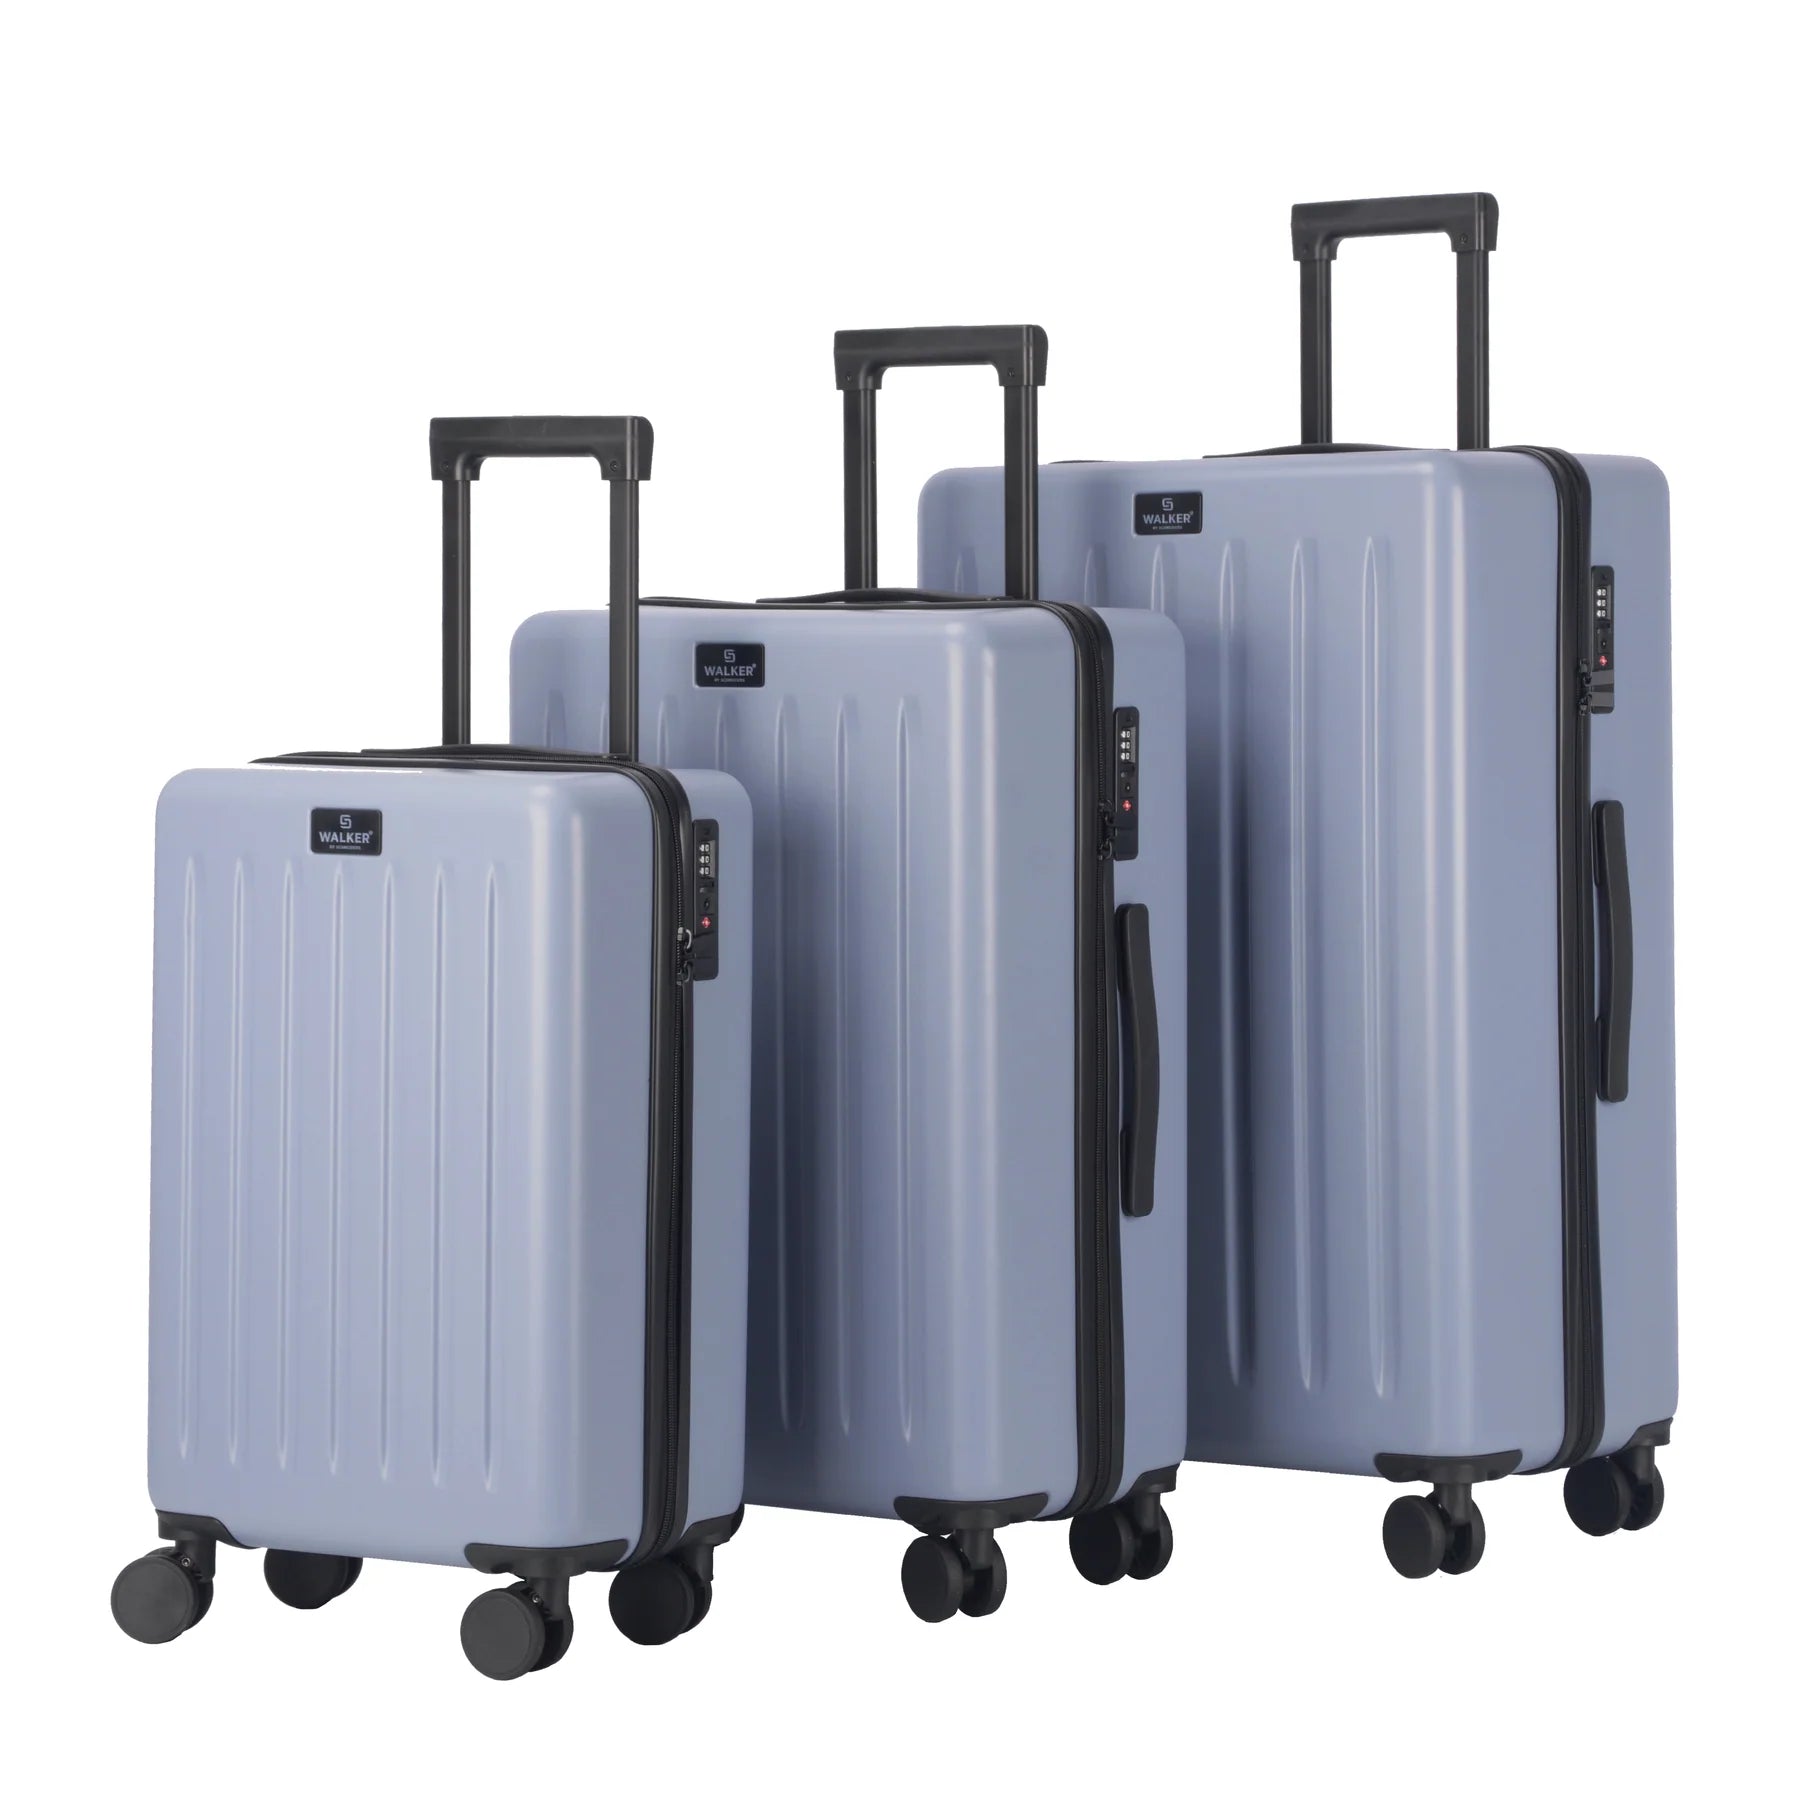 Walker Florida suitcase set 3-piece - Grey